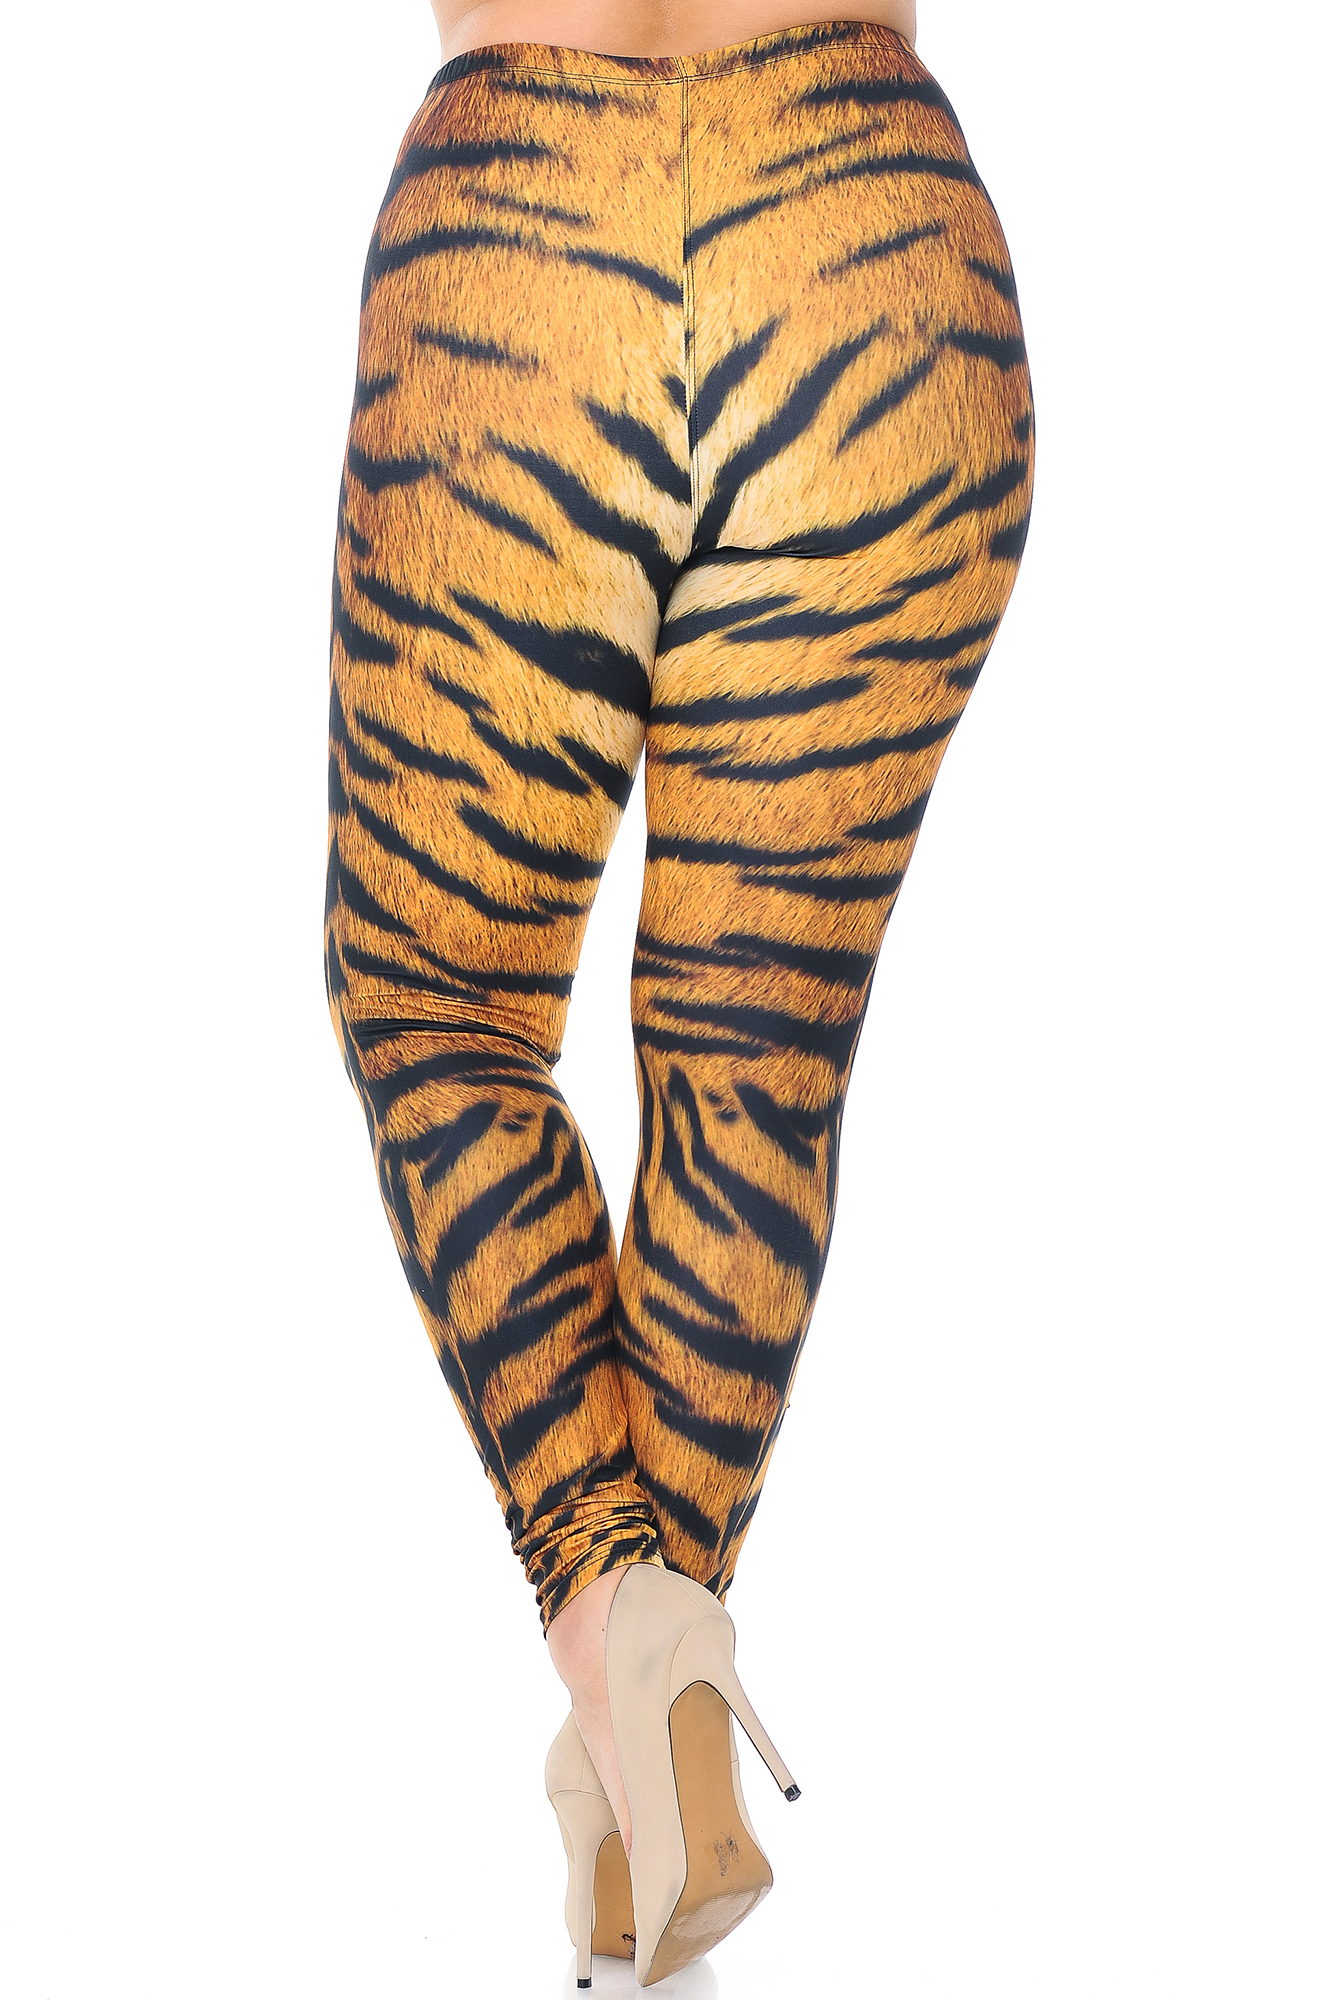 Tiger Print Tights - Plus Size Hosiery - Retro - Gigi's Canada